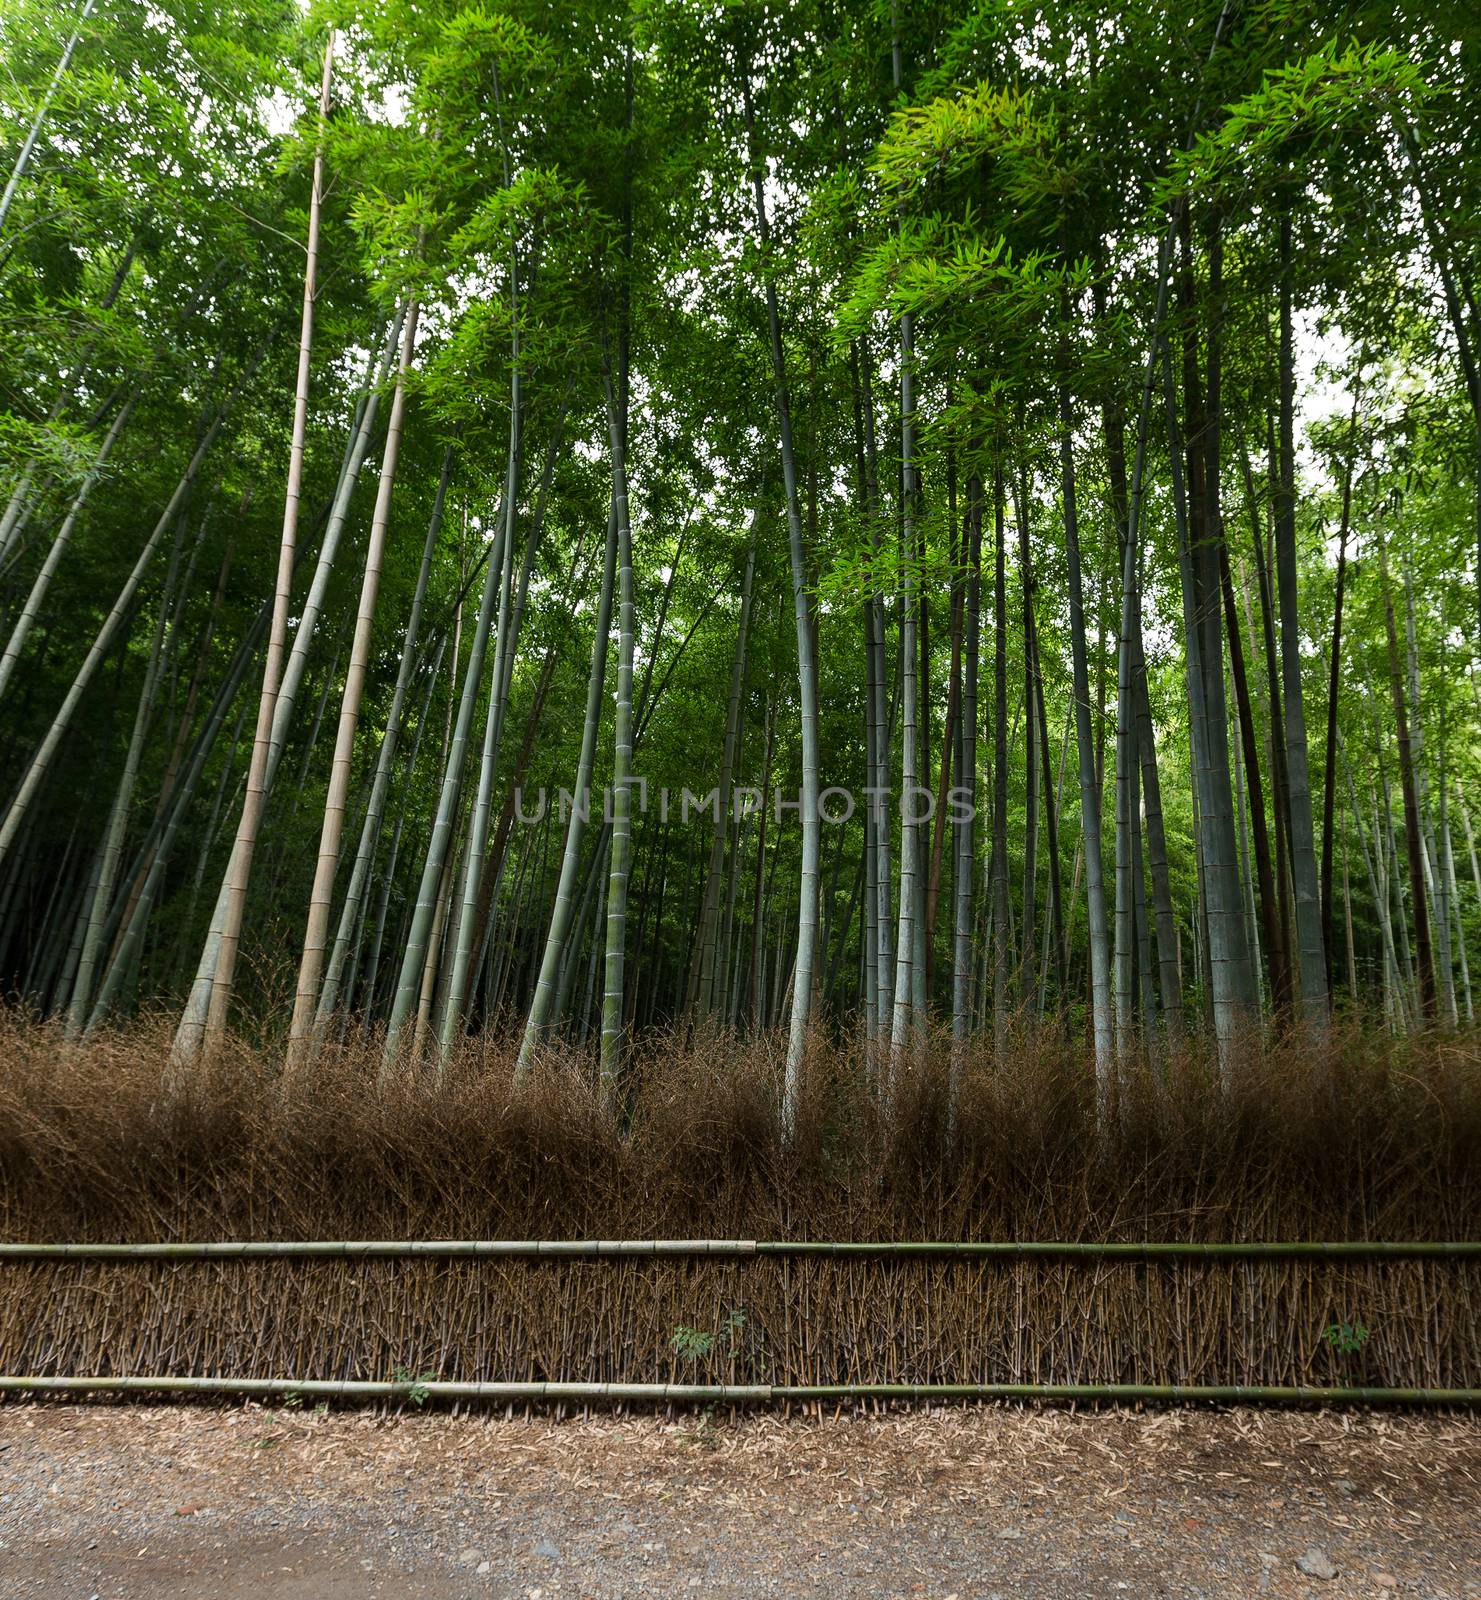 Bamboo trees and walkway by leungchopan